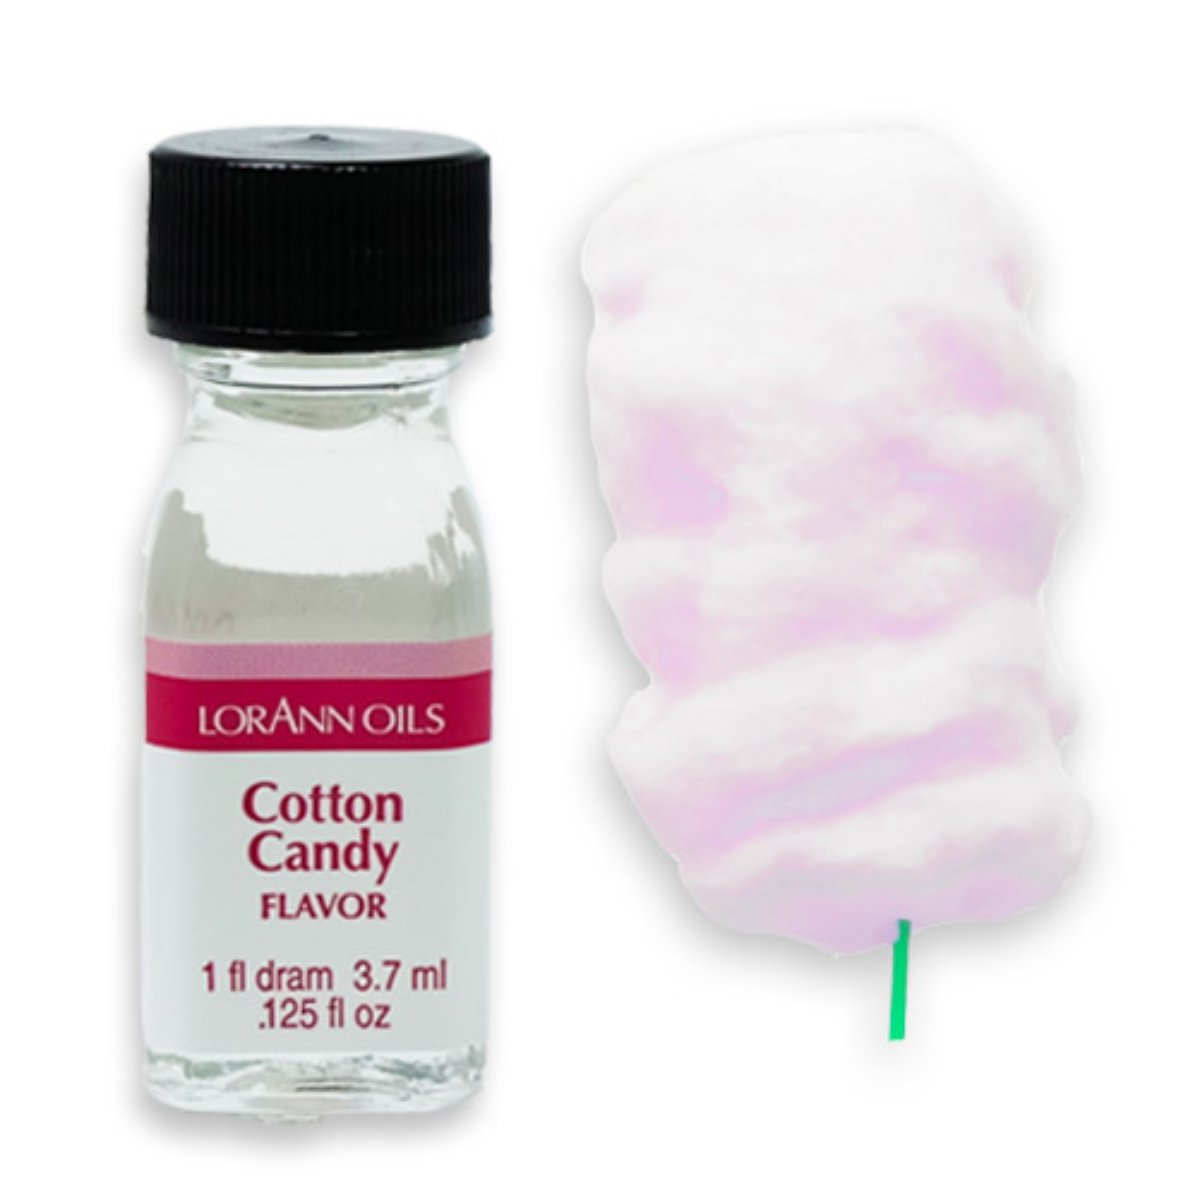 Cotton Candy Flavor 1 Dram - Bake Supply Plus